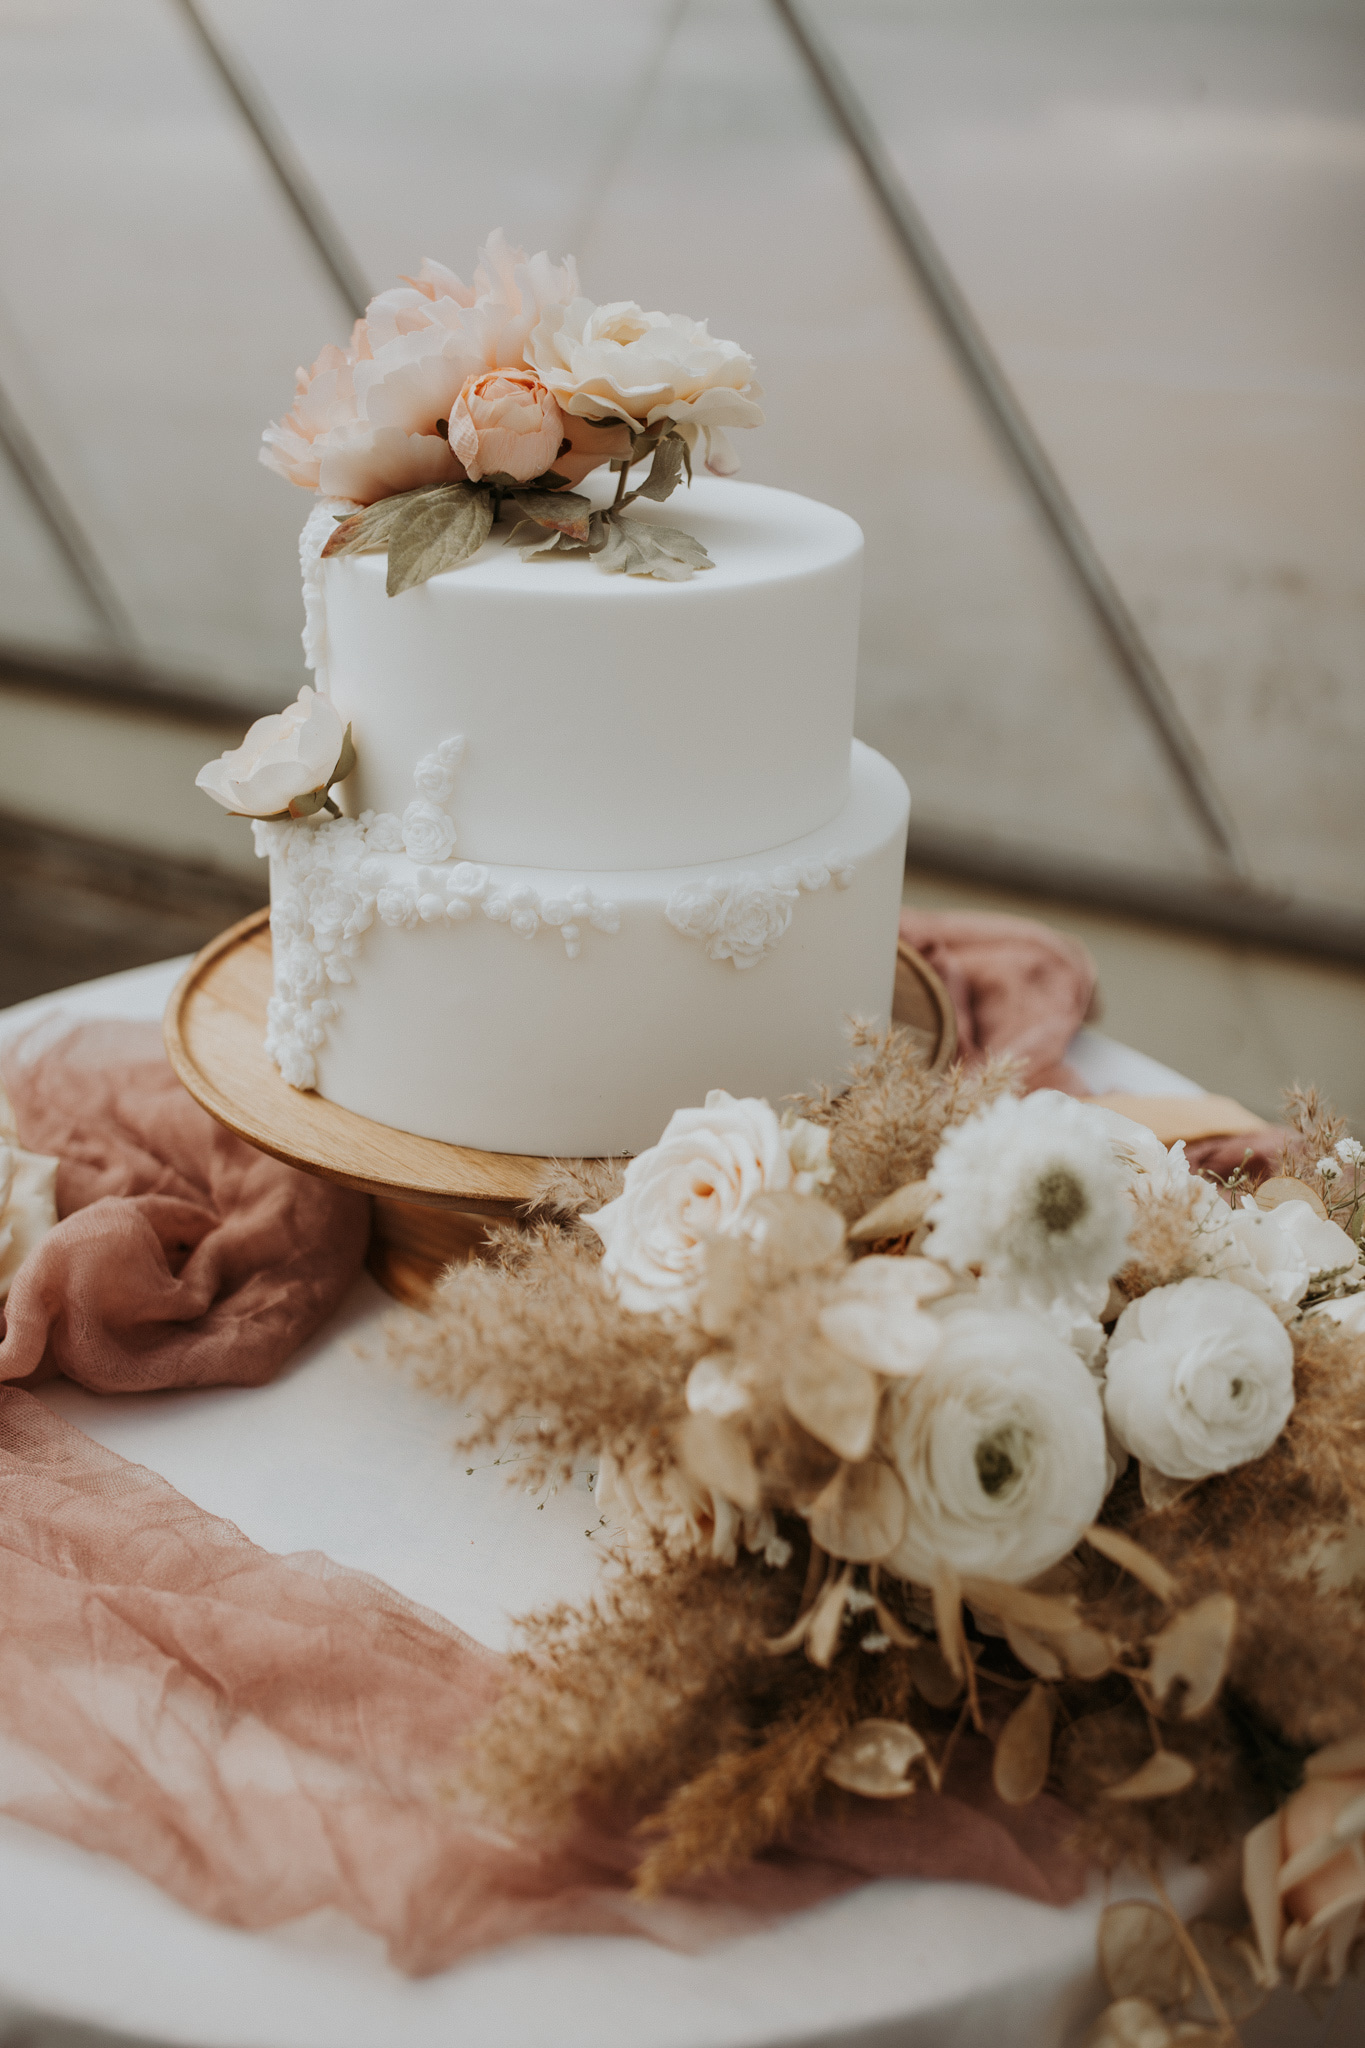 A beautiful 2-tier custom wedding cake from Village Patisserie in Toledo, Ohio